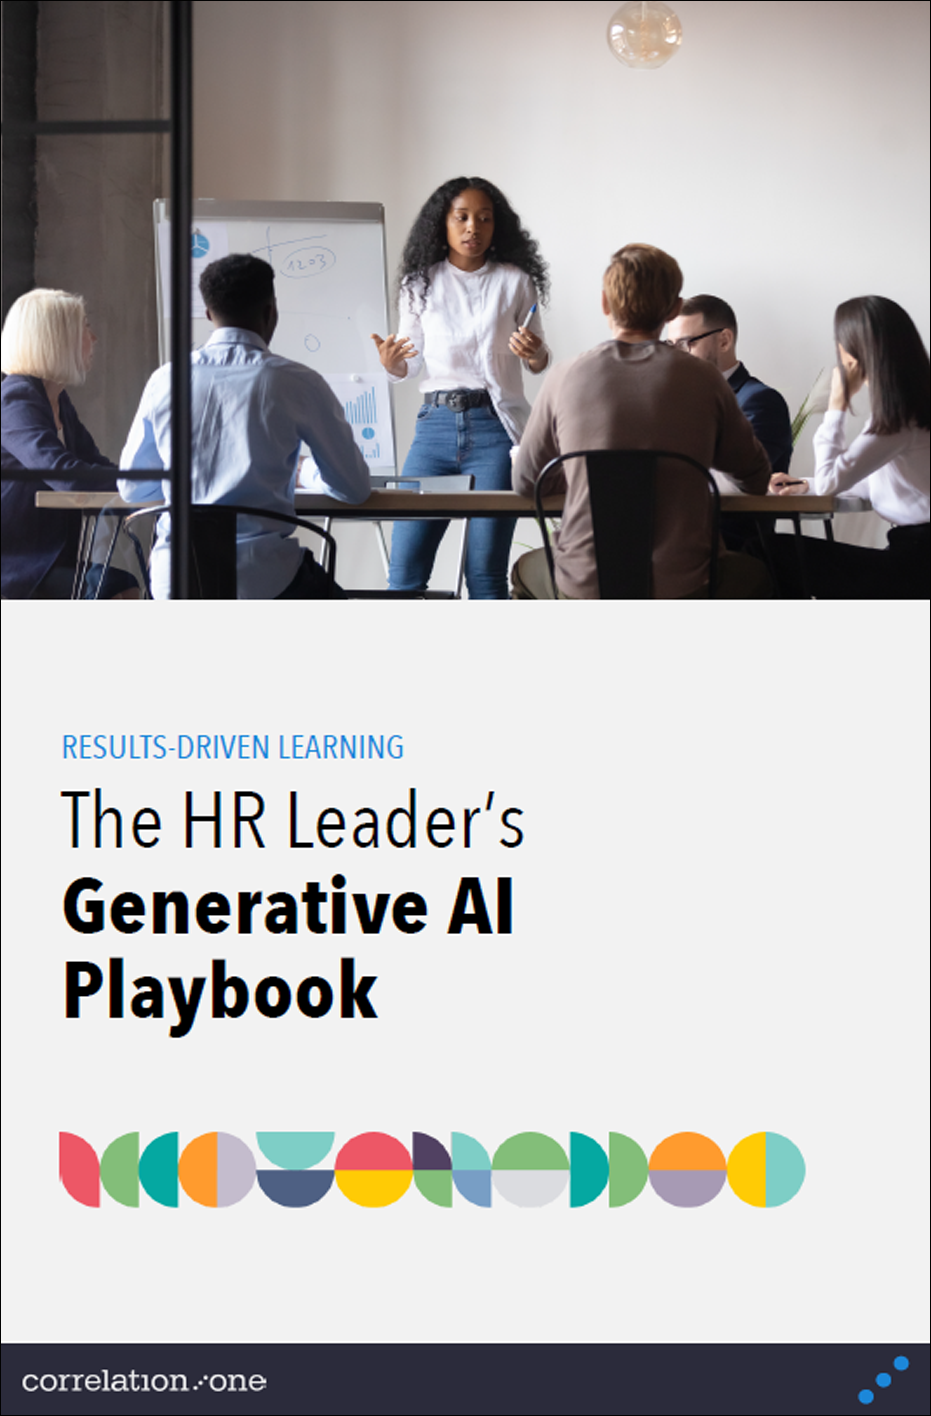 HR Leader's GenAI Playbook